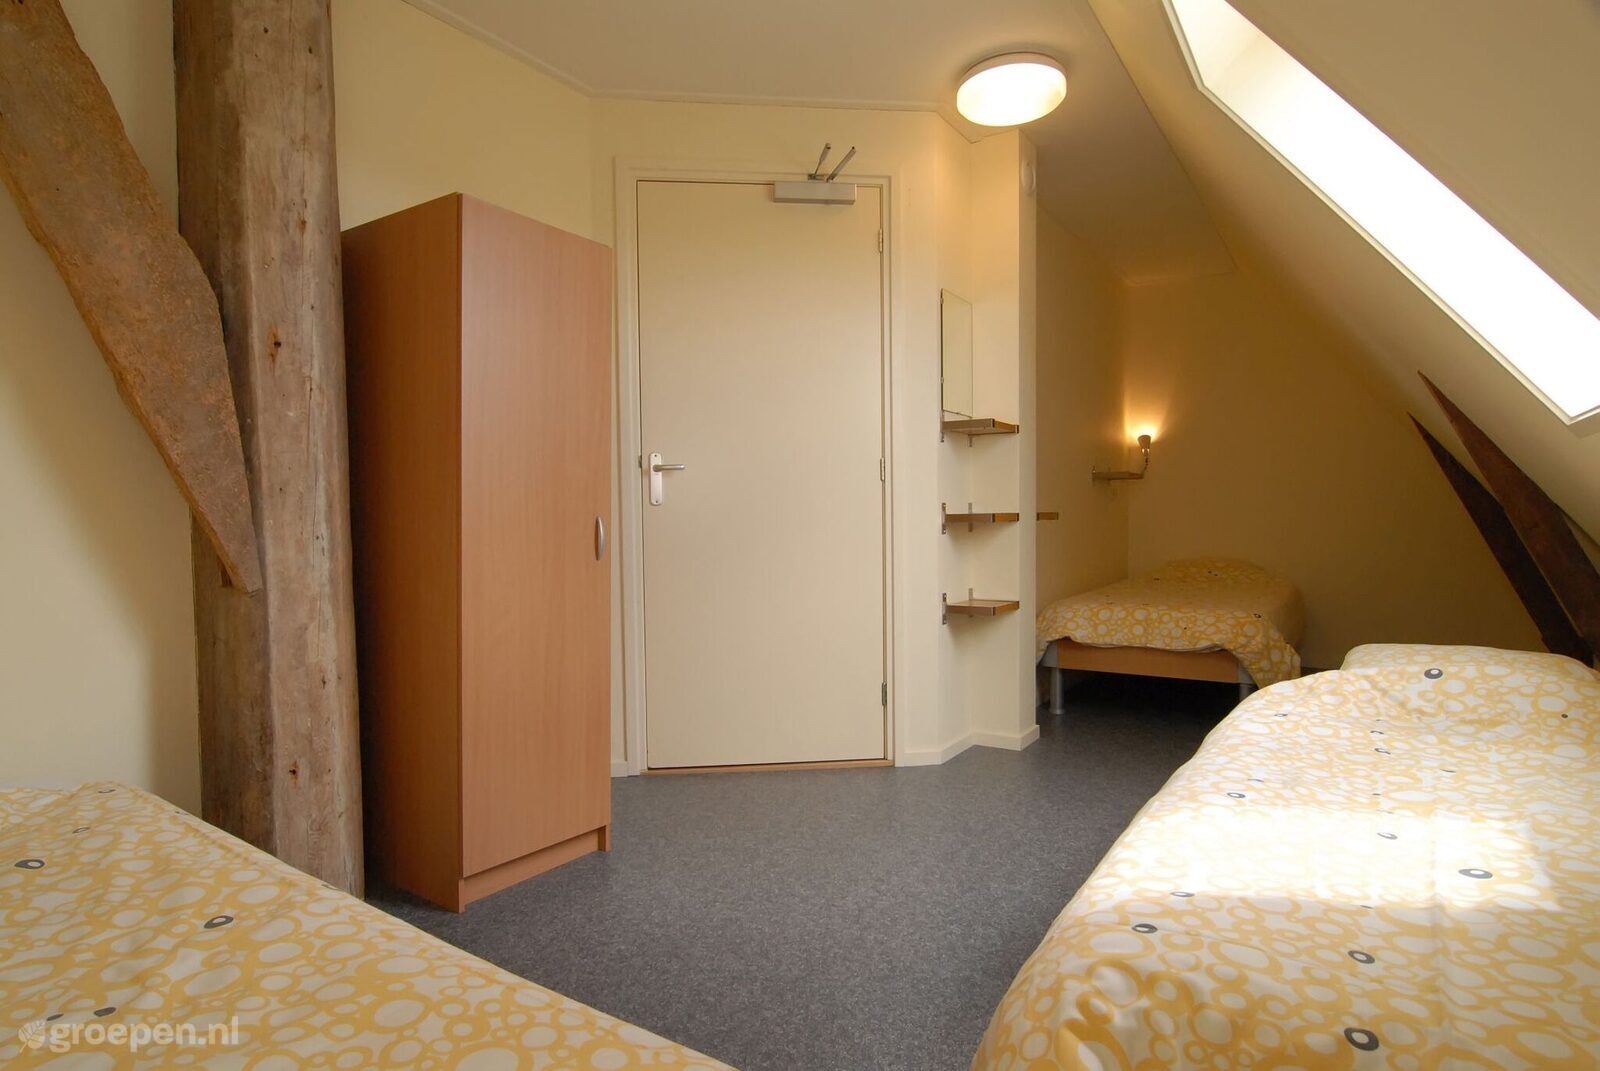 Group accommodation Sint Annaparochie